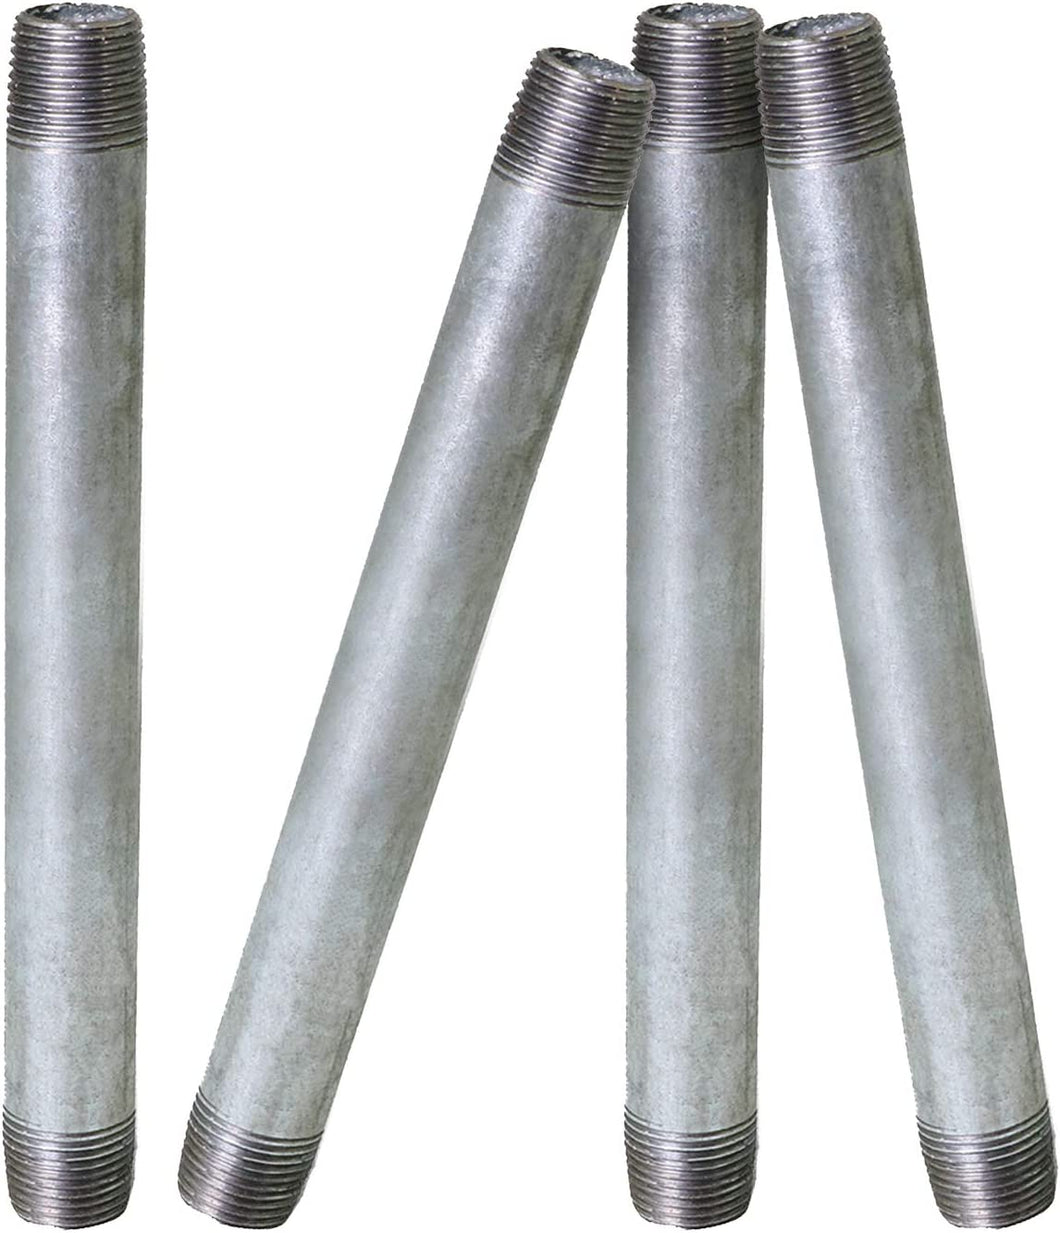 Everflow Supplies NPGL1180-4 steel nipple pipe